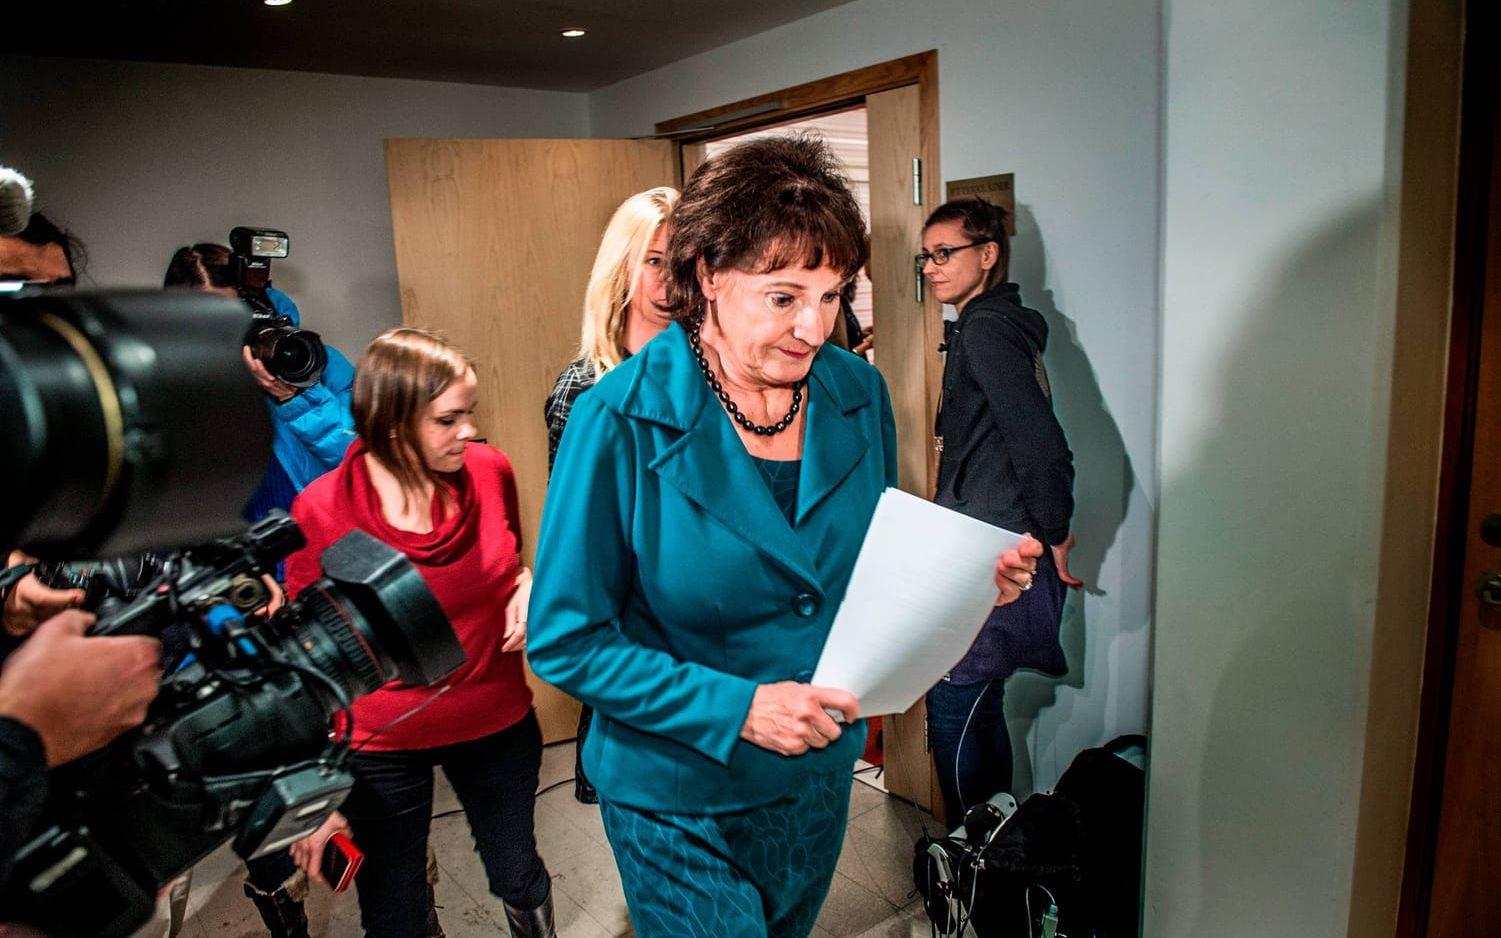 Kommunals dåvarande ordförande Annelie Nordström tvingas avgå efter Aftonbladets avslöjande i januari 2016. Bild: Tomas Oneborg